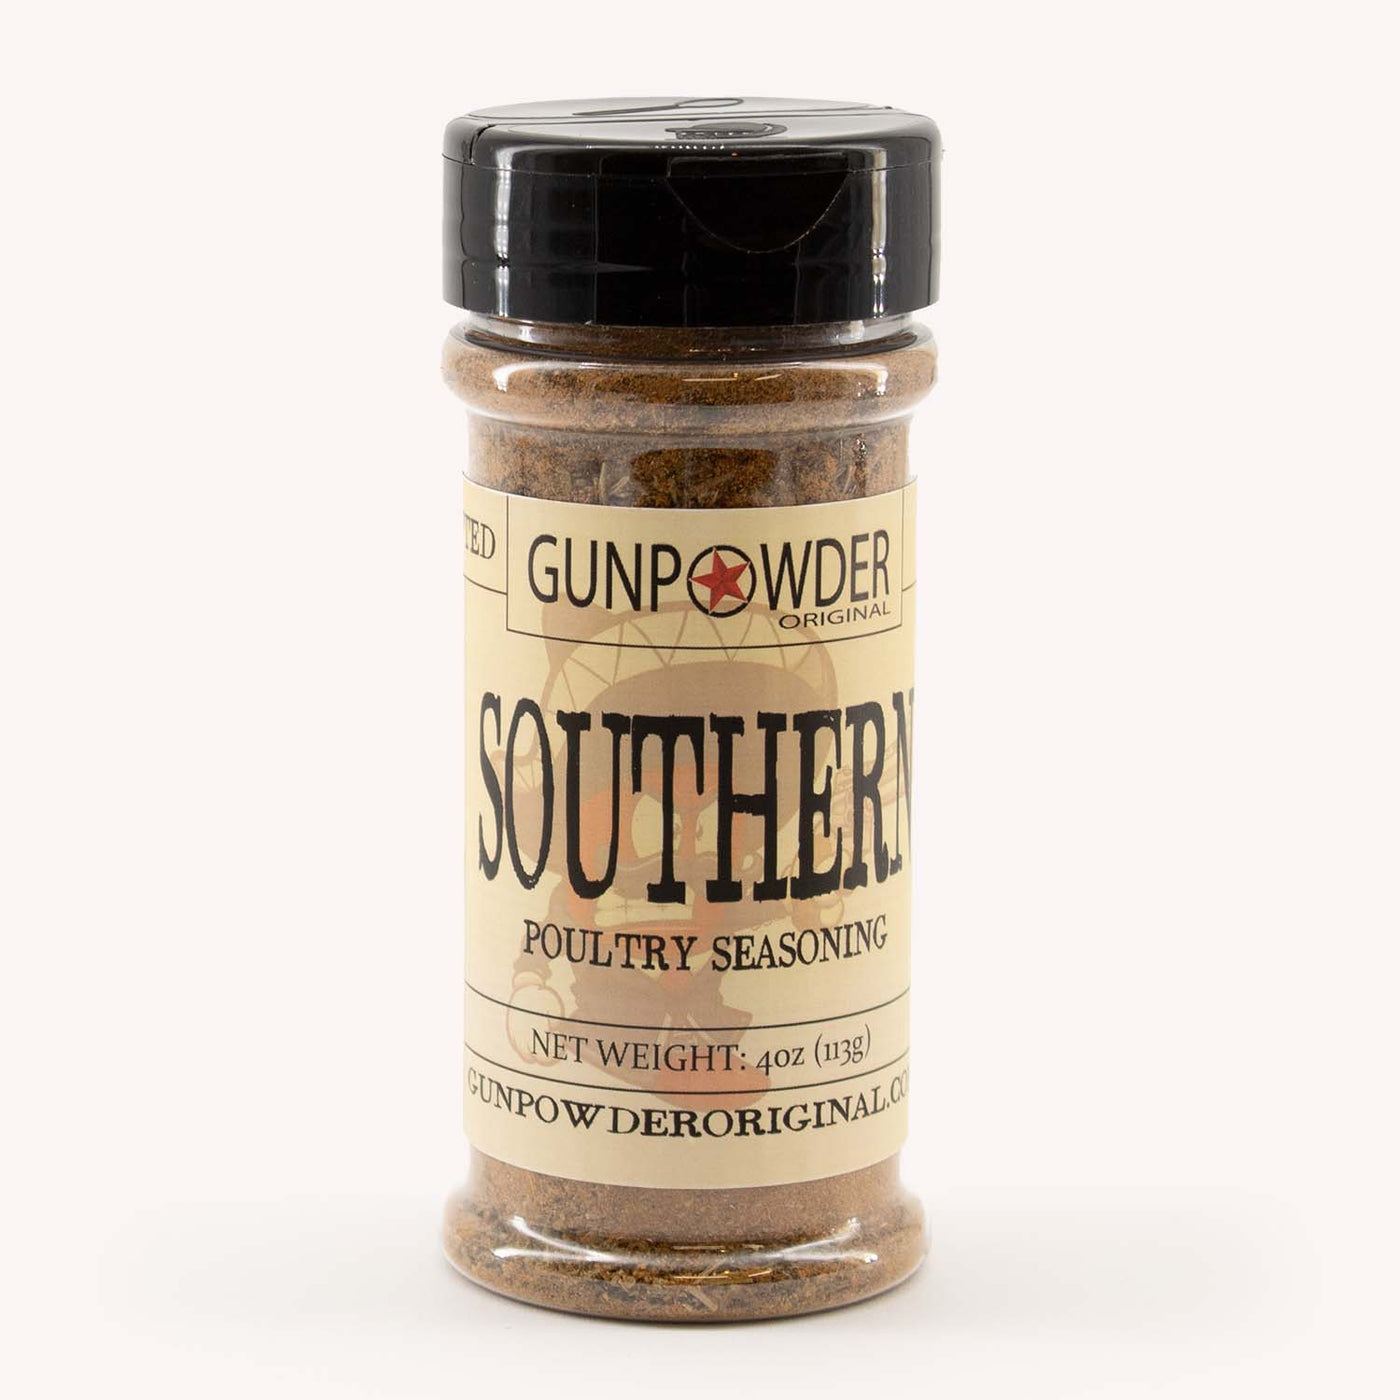 Gunpowder Original Southern Poultry Seasoning